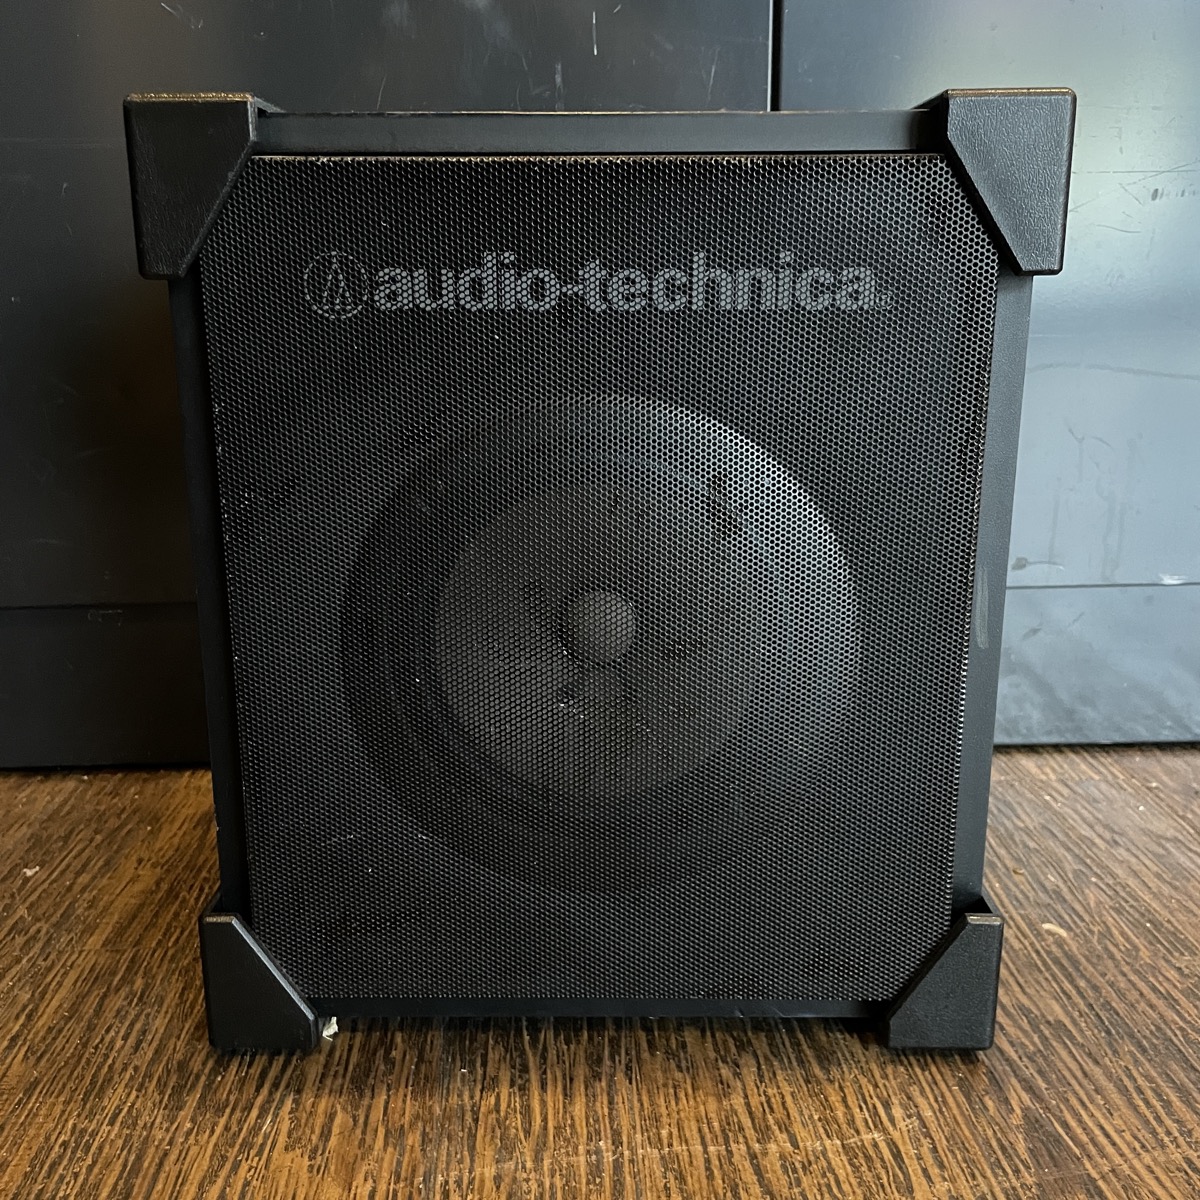  Audio Technica Audio-Technica ATW-SP77 wireless amplifier speaker -GrunSound-m119-